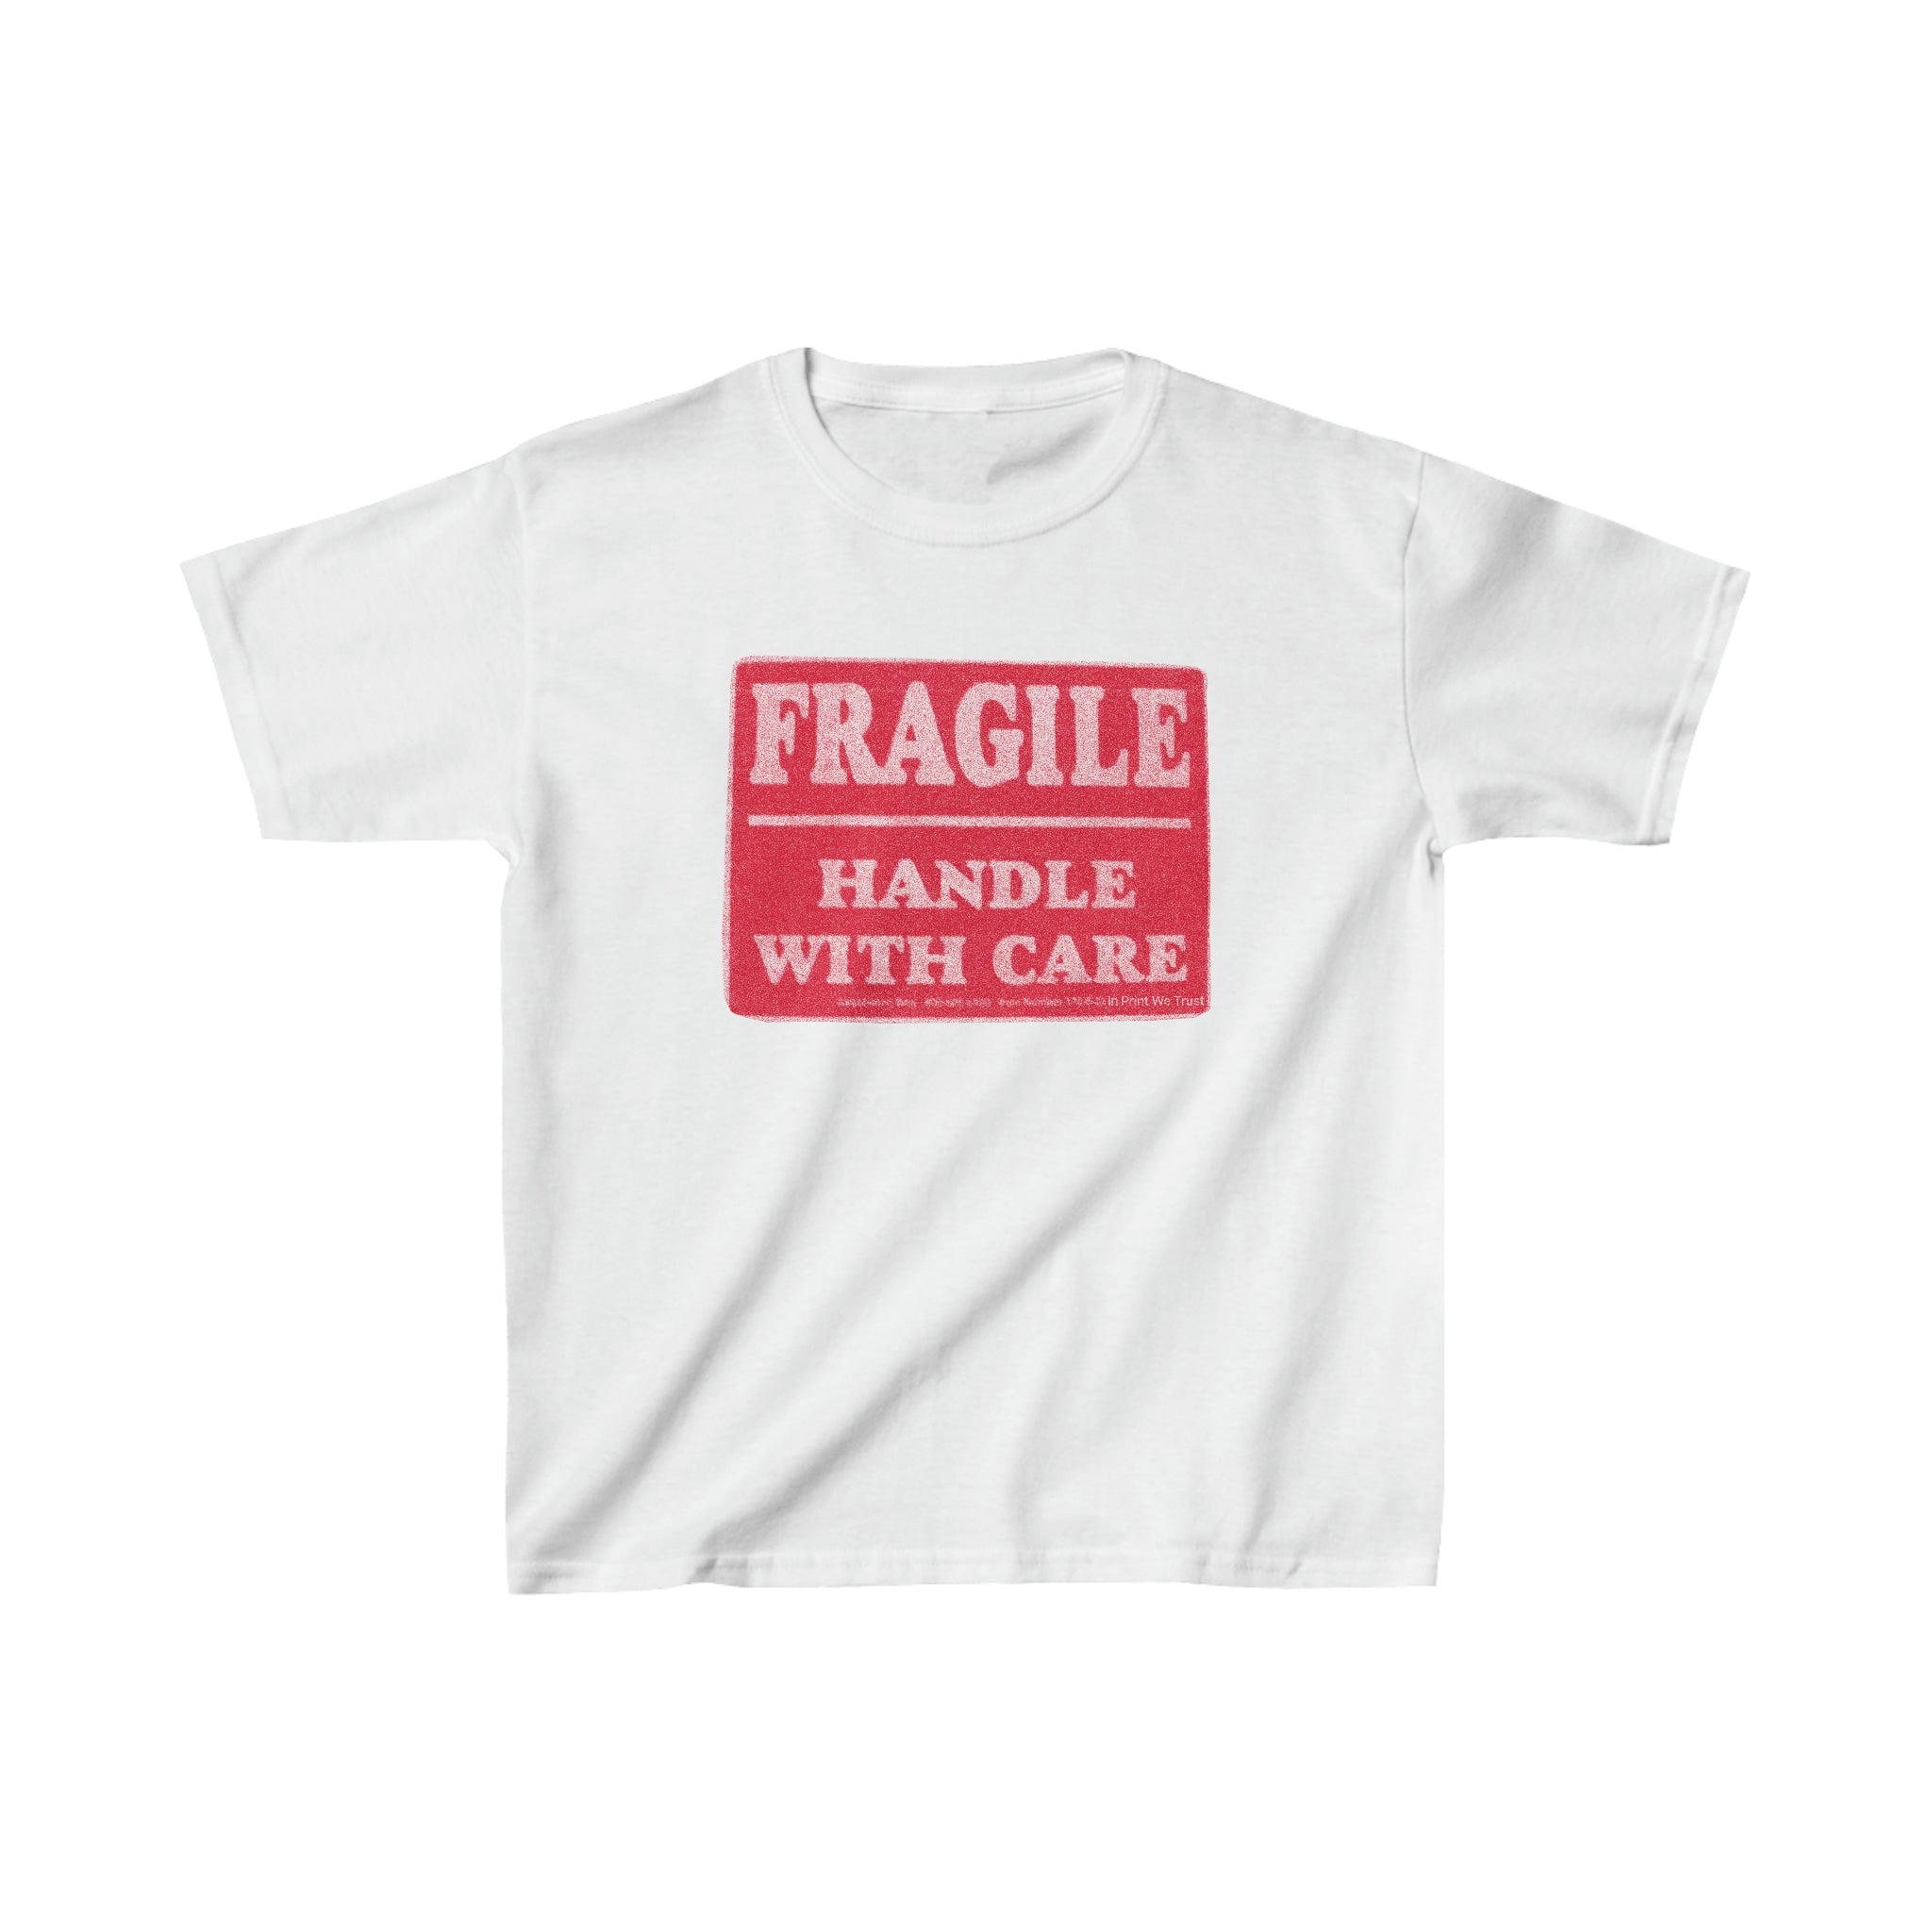 'Fragile' baby tee